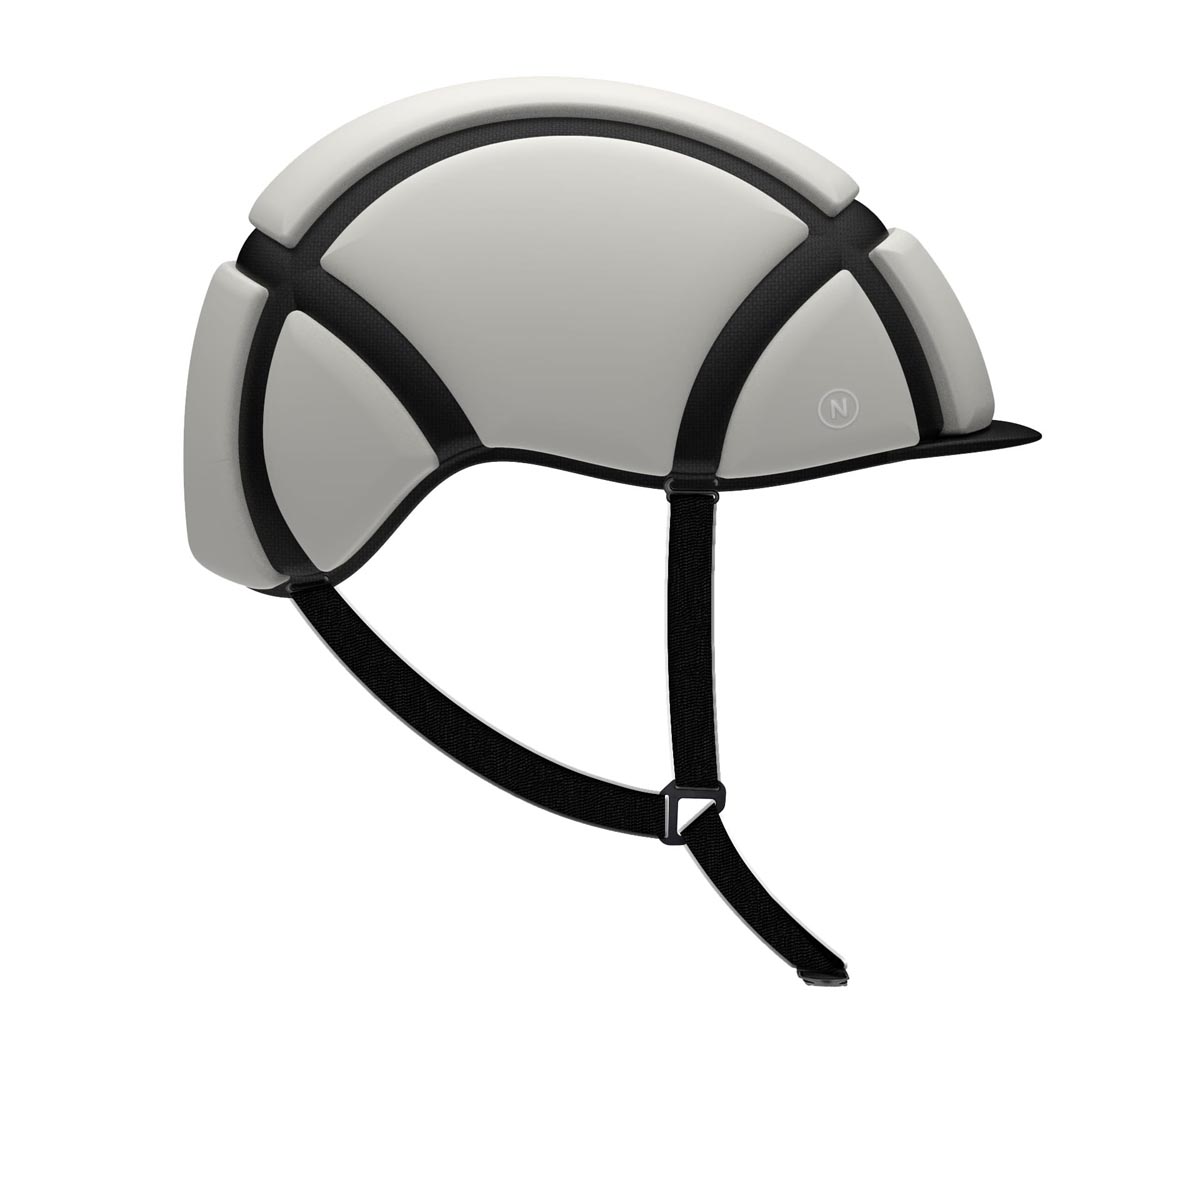 World’s thinnest bicycle helmet Newton-Rider